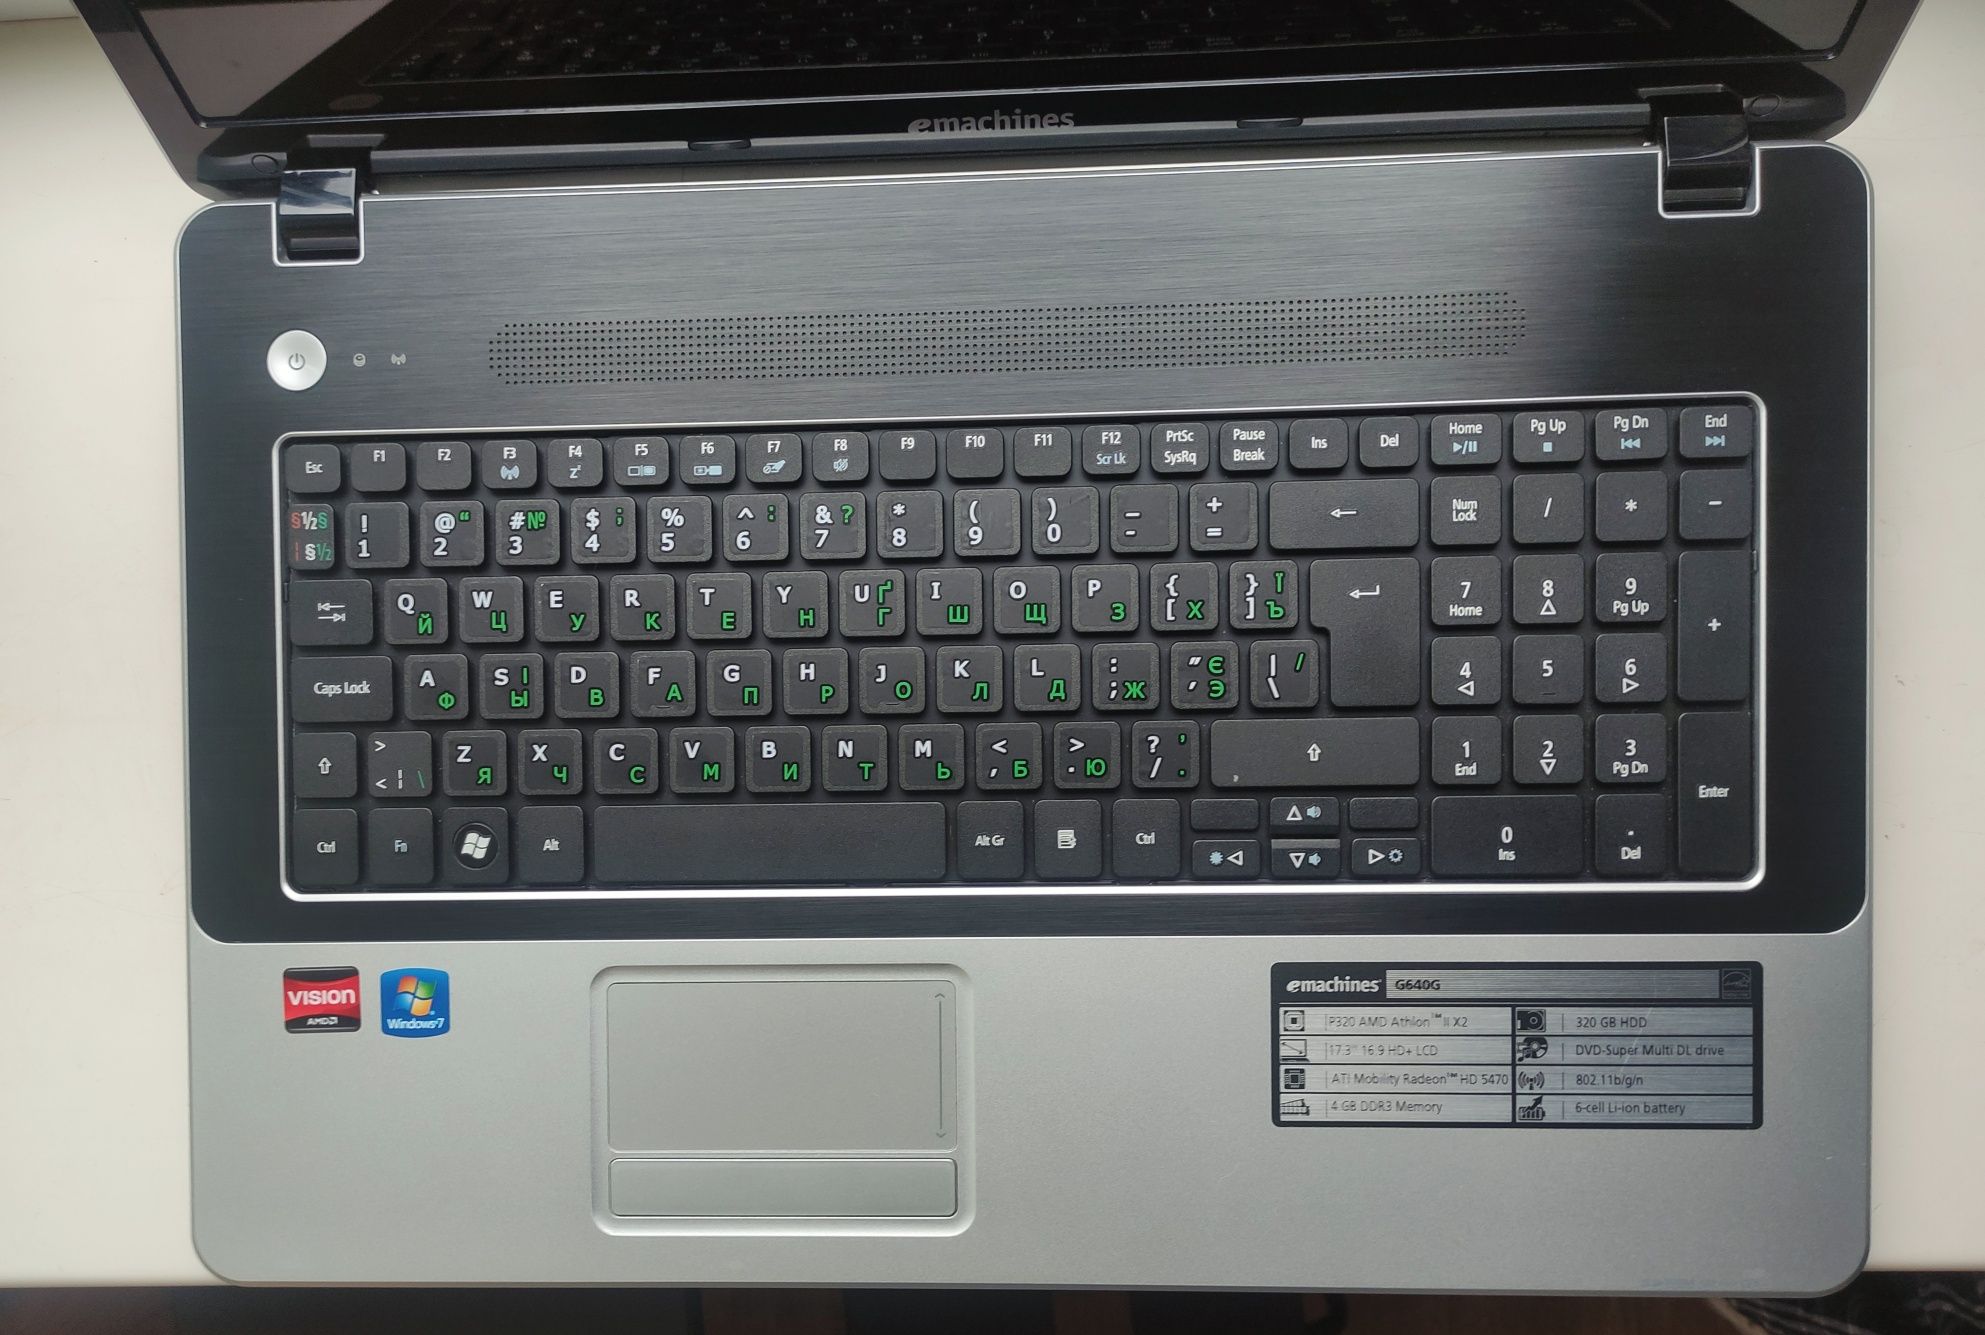 Ноутбук Acer emachines G640G